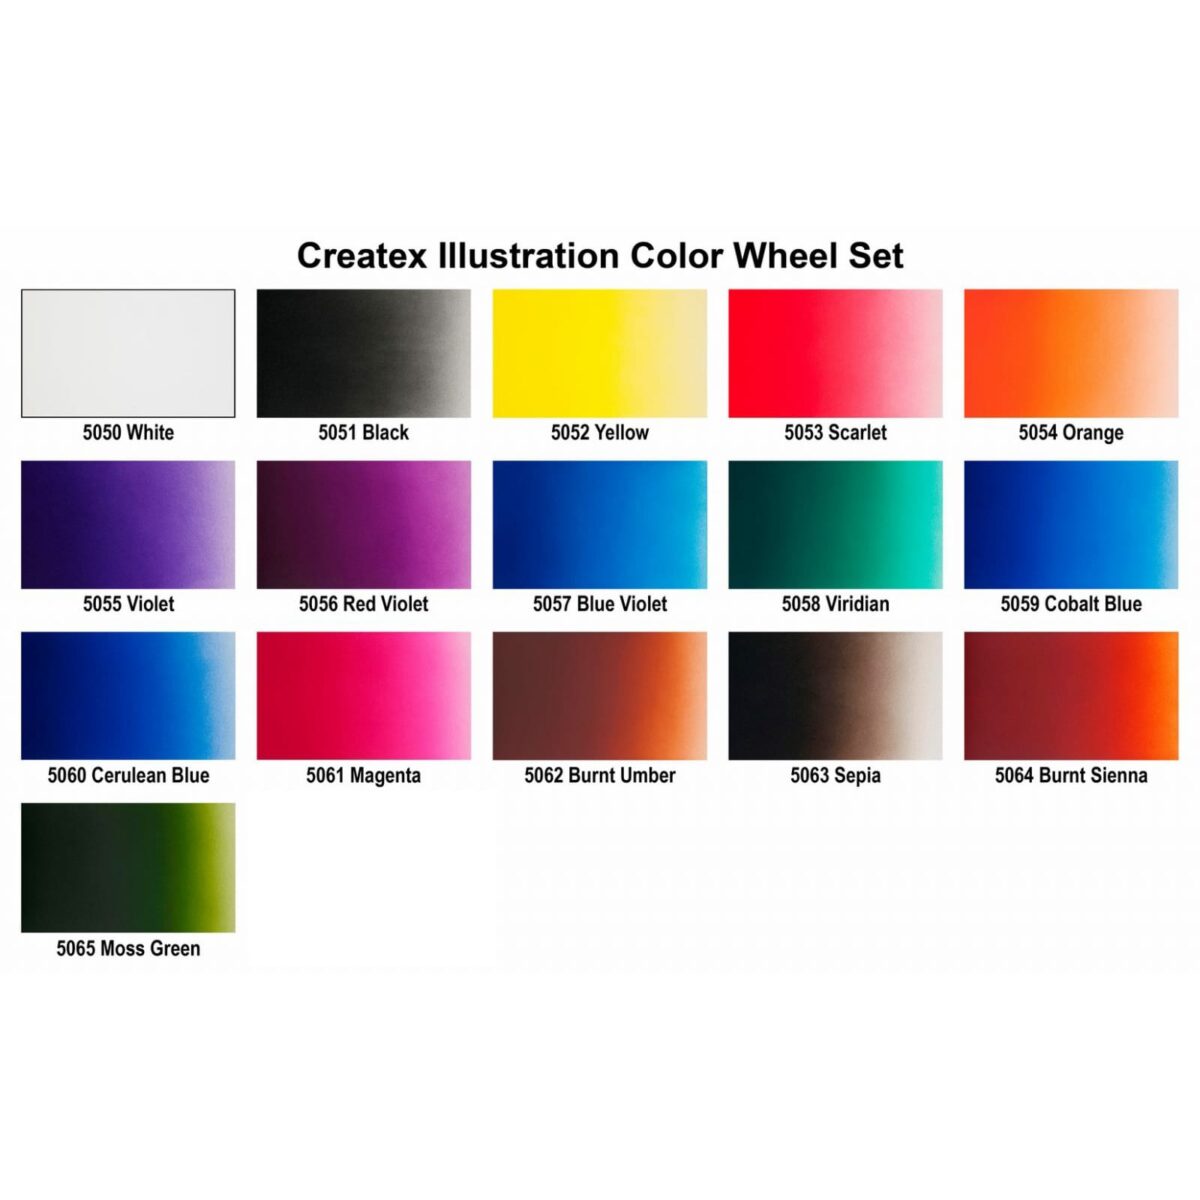 Createx illustration color wheel set